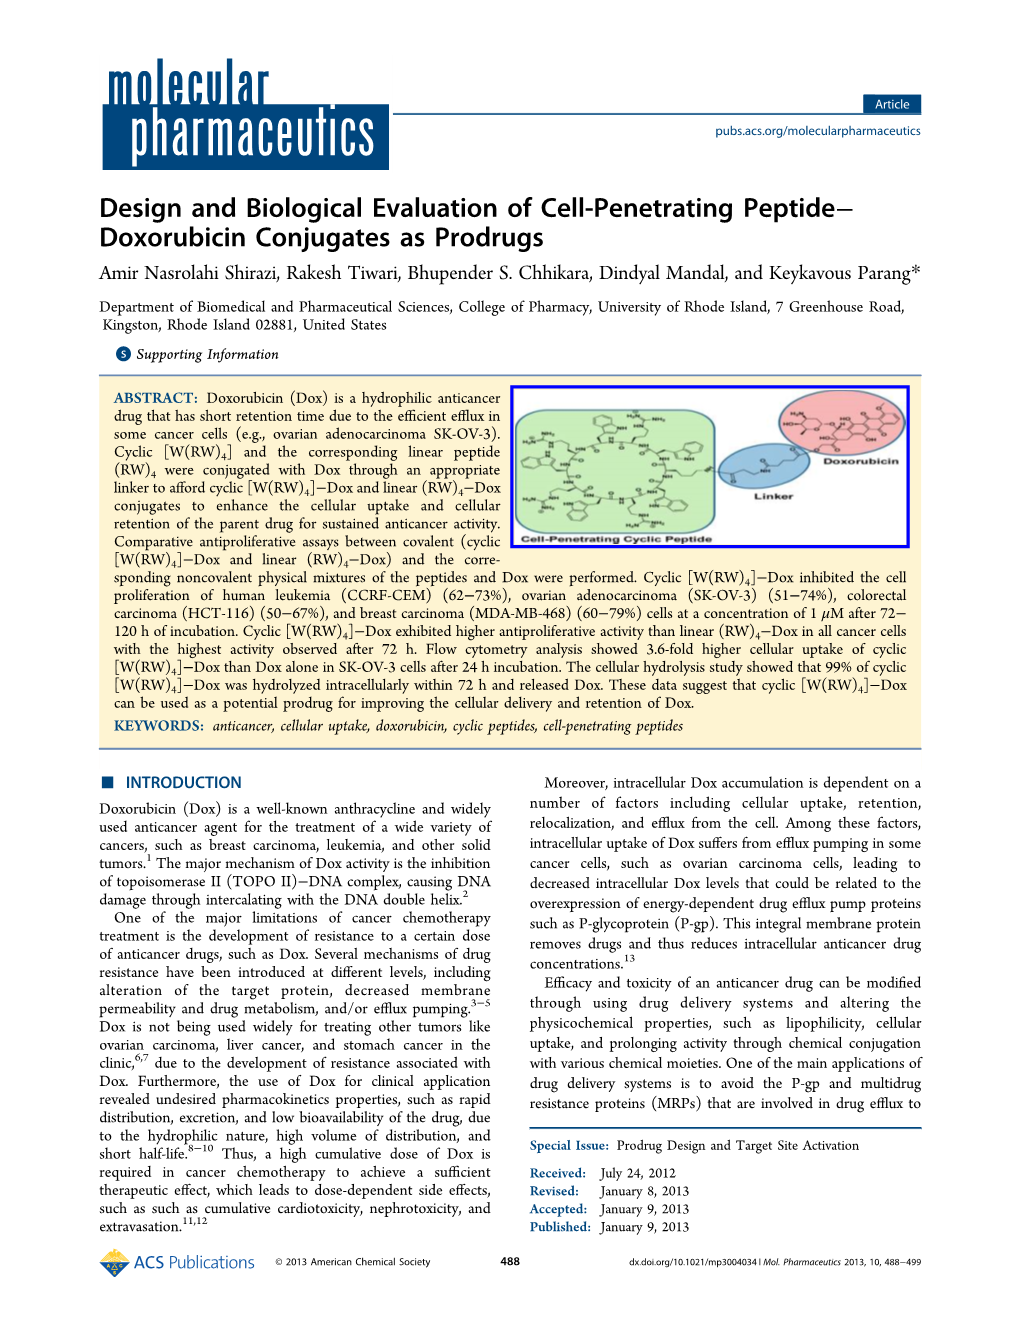 Design and Biological Evaluation of Cell-Penetrating Peptide− Doxorubicin Conjugates As Prodrugs Amir Nasrolahi Shirazi, Rakesh Tiwari, Bhupender S